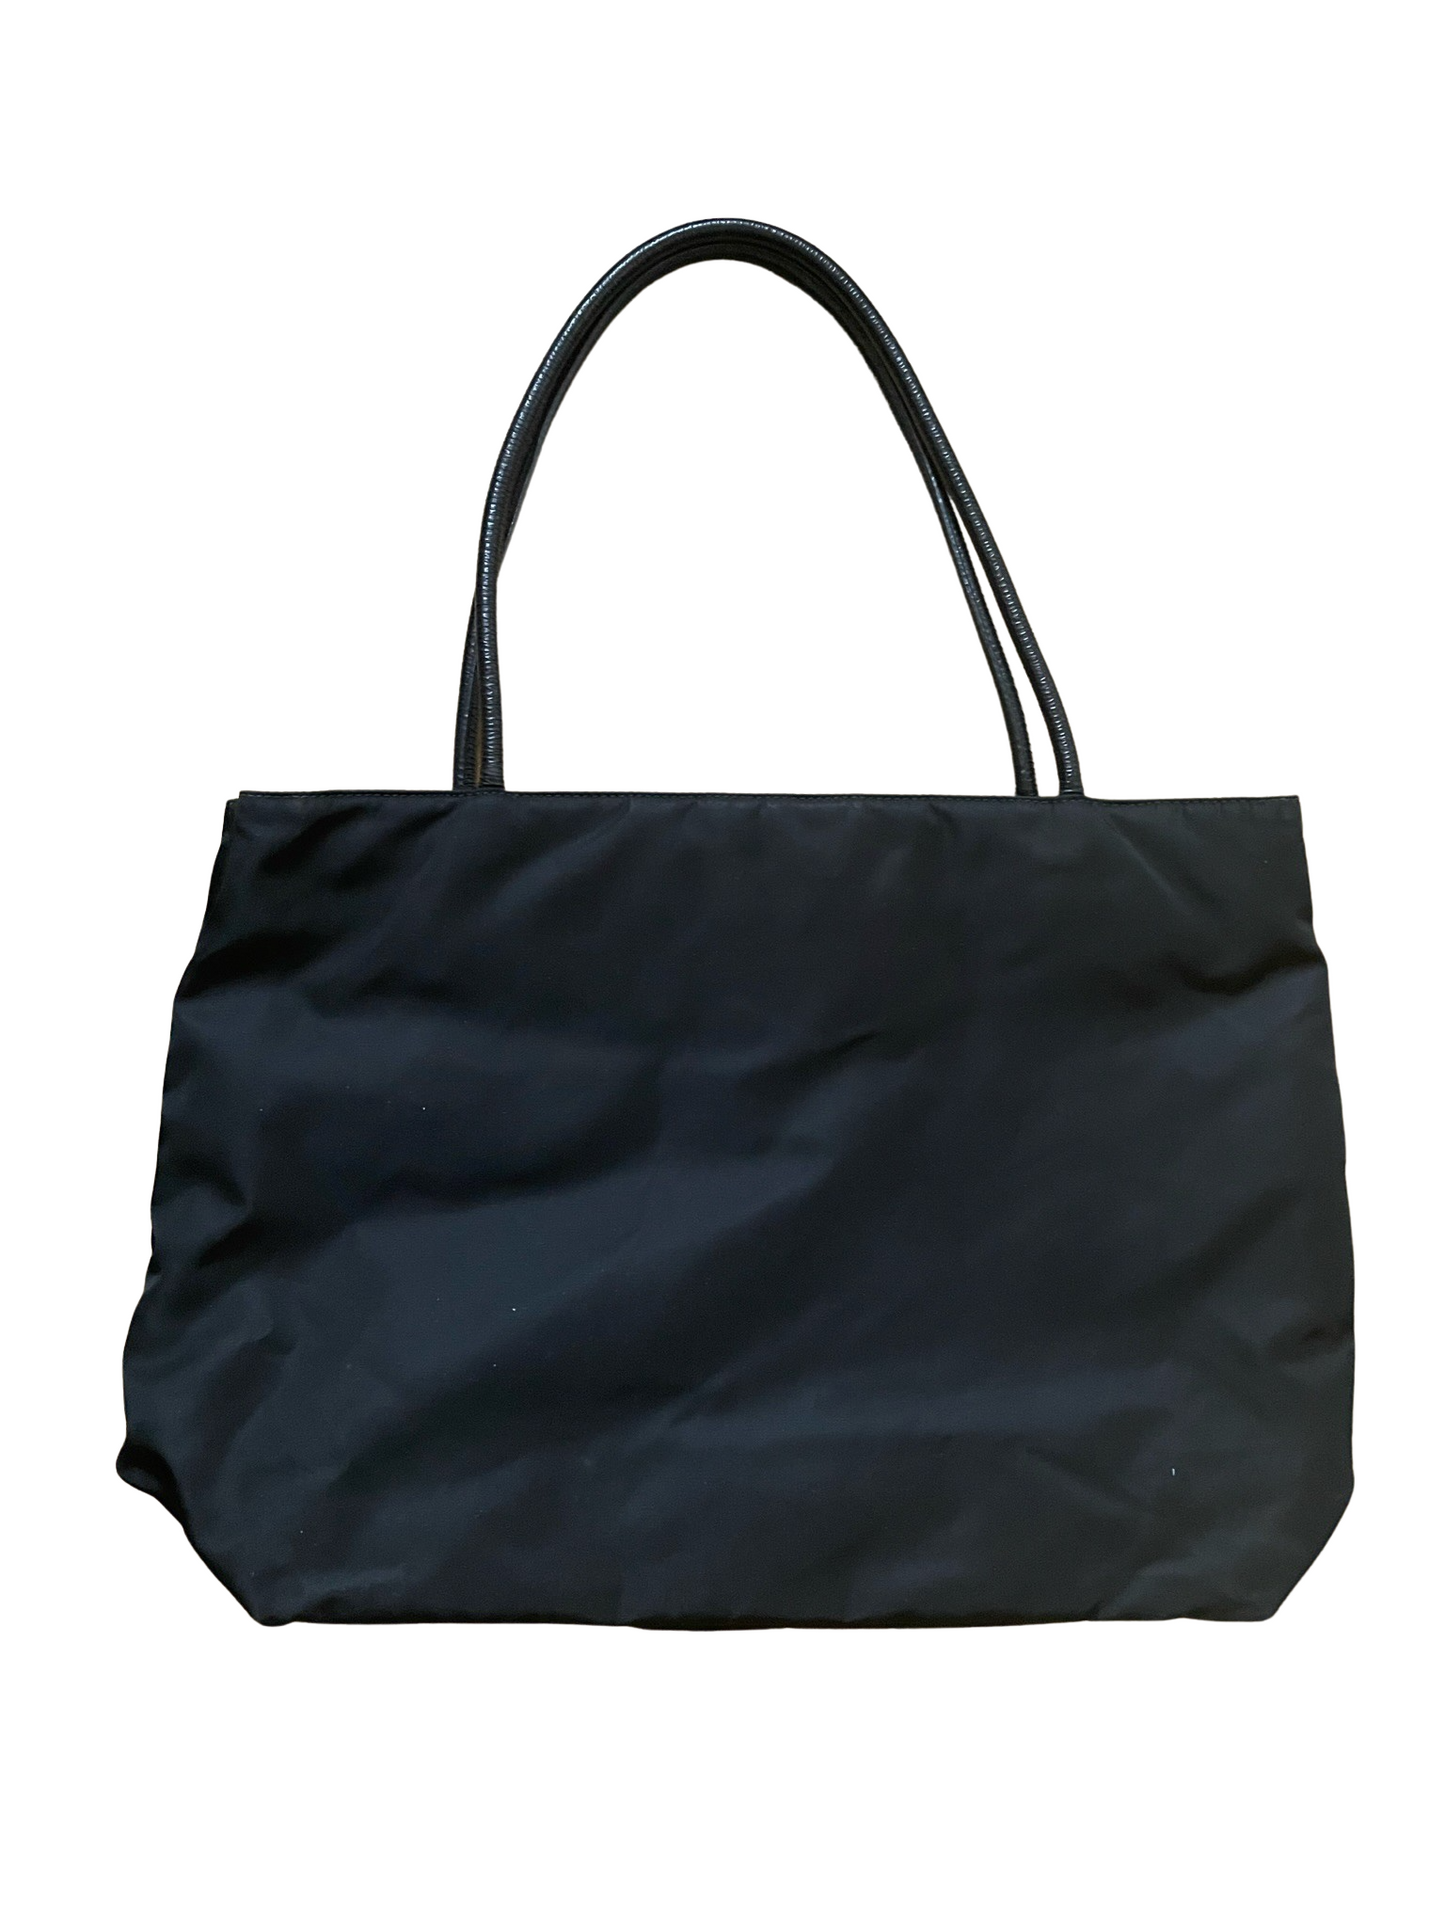 Prada Black Nylon Shoulder Bag with Gold Hardware